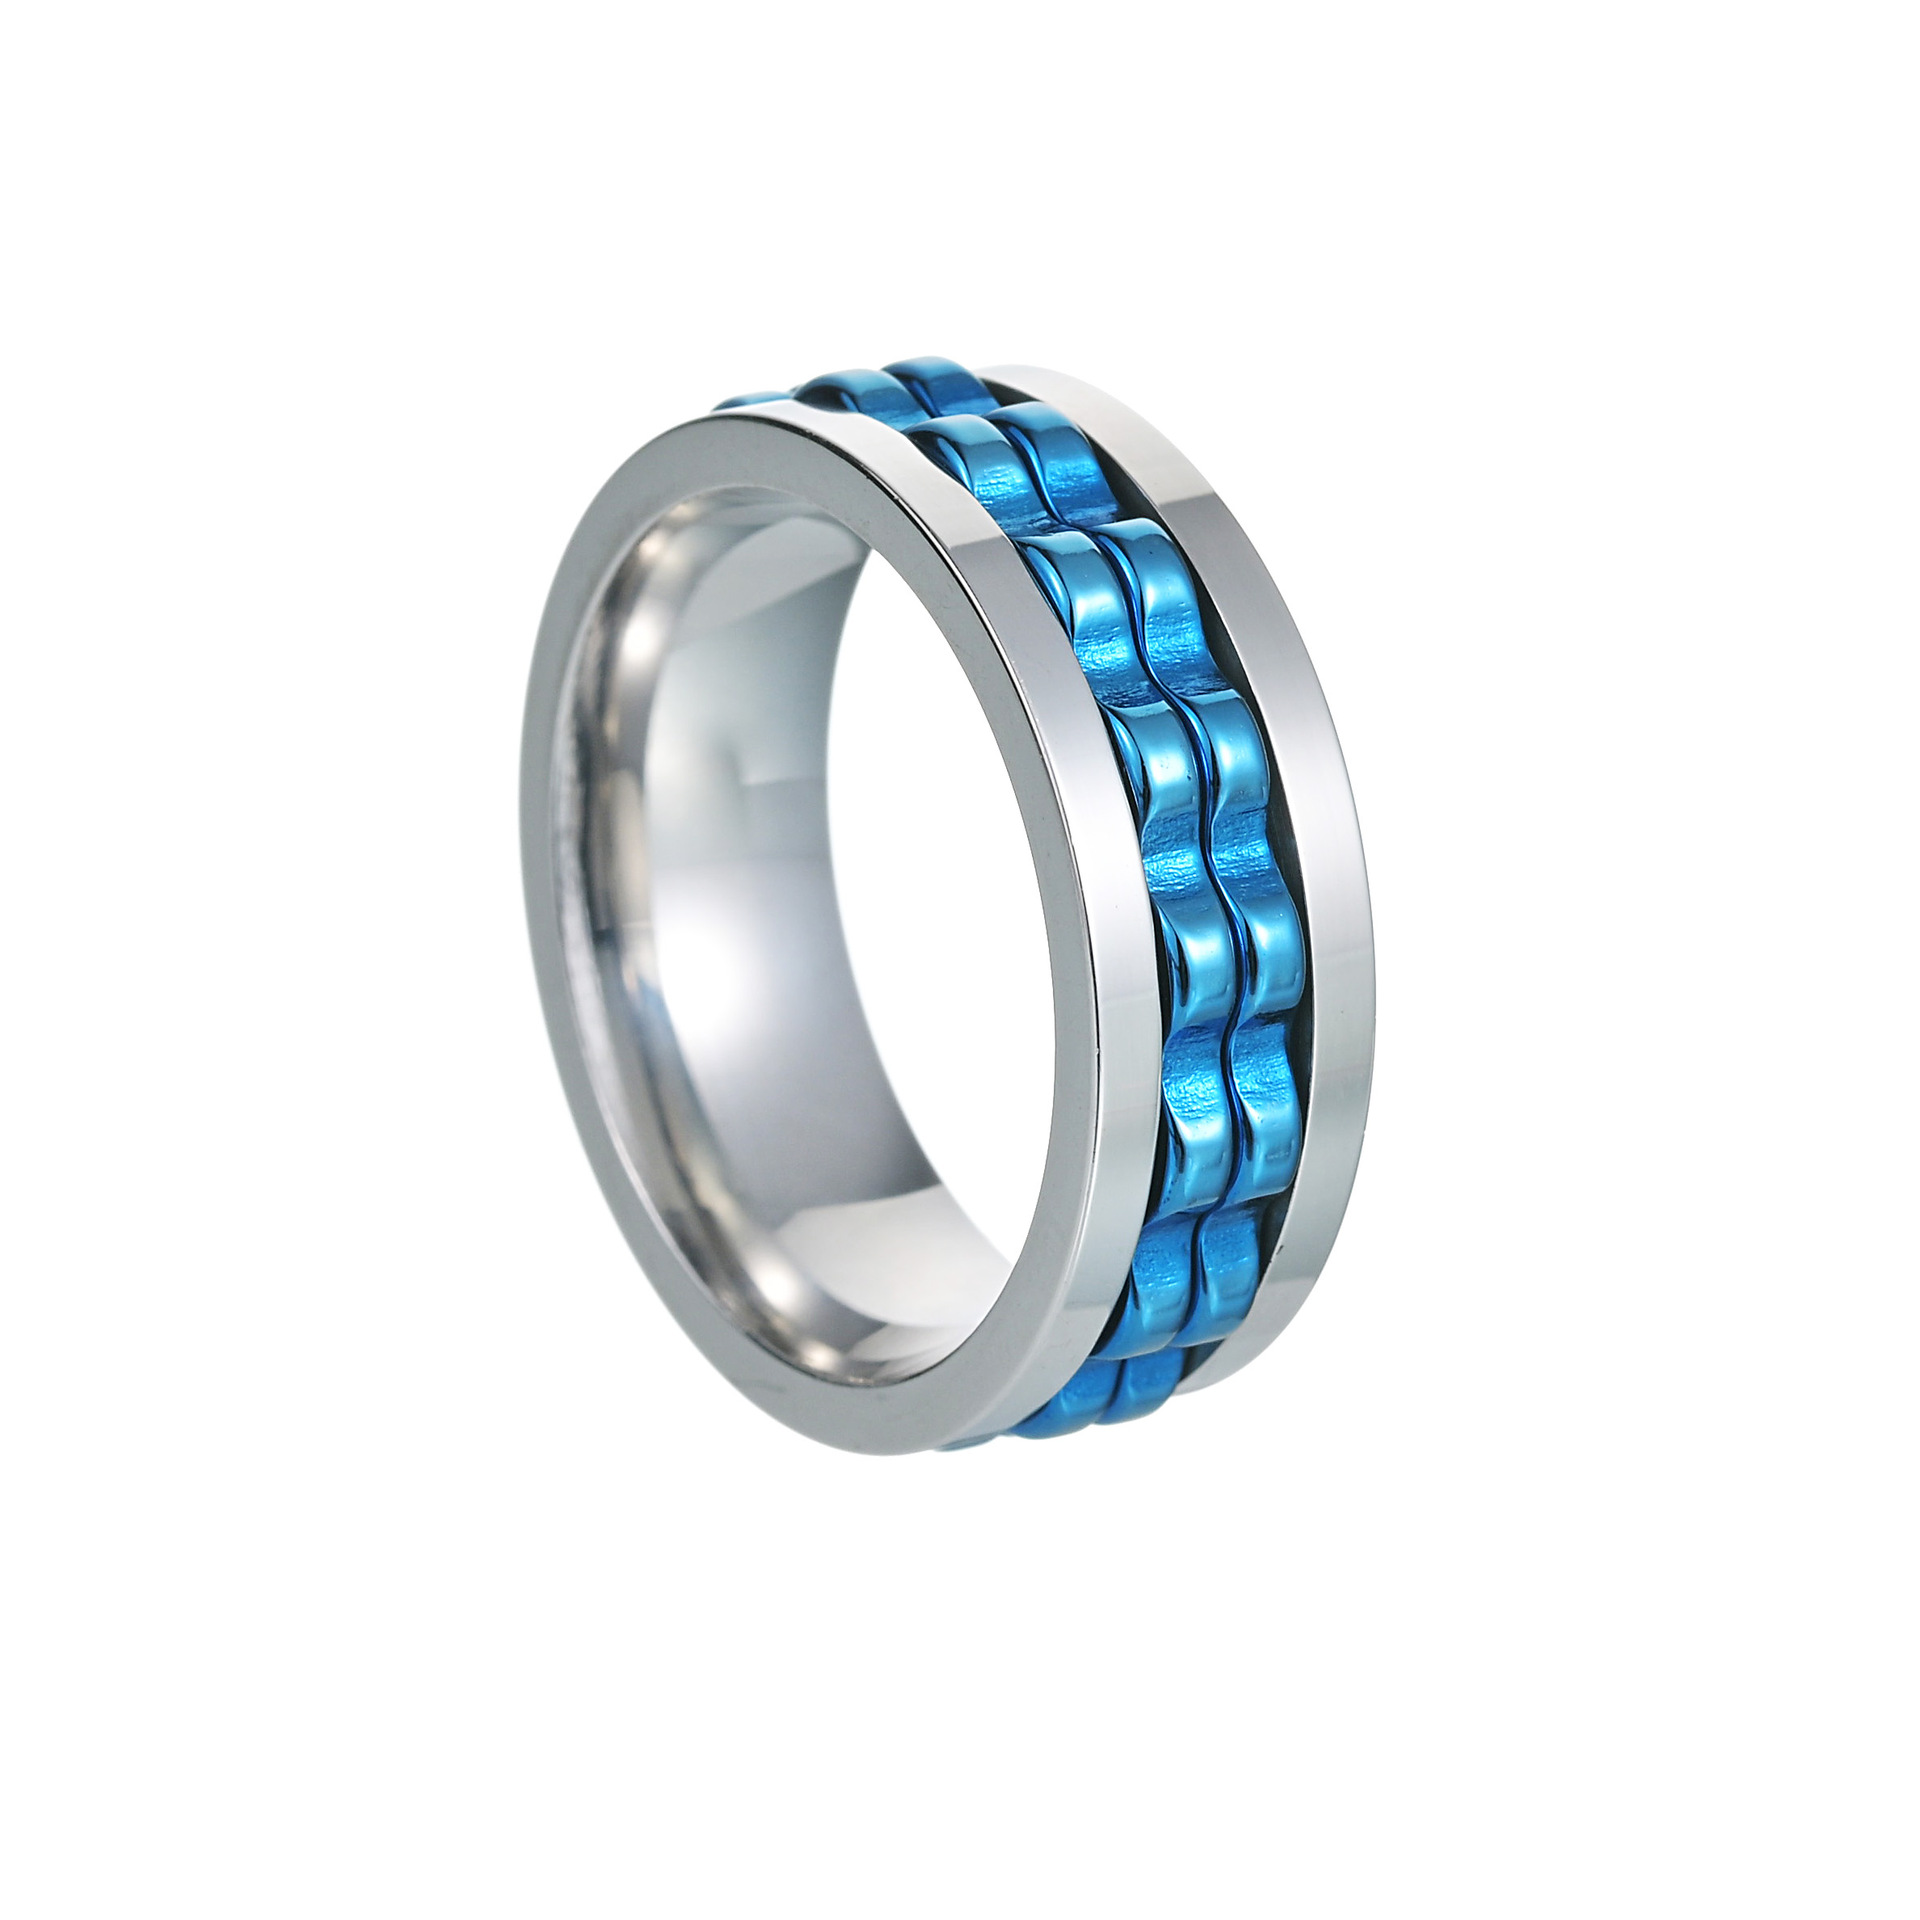 4:Silver ring   blue gear